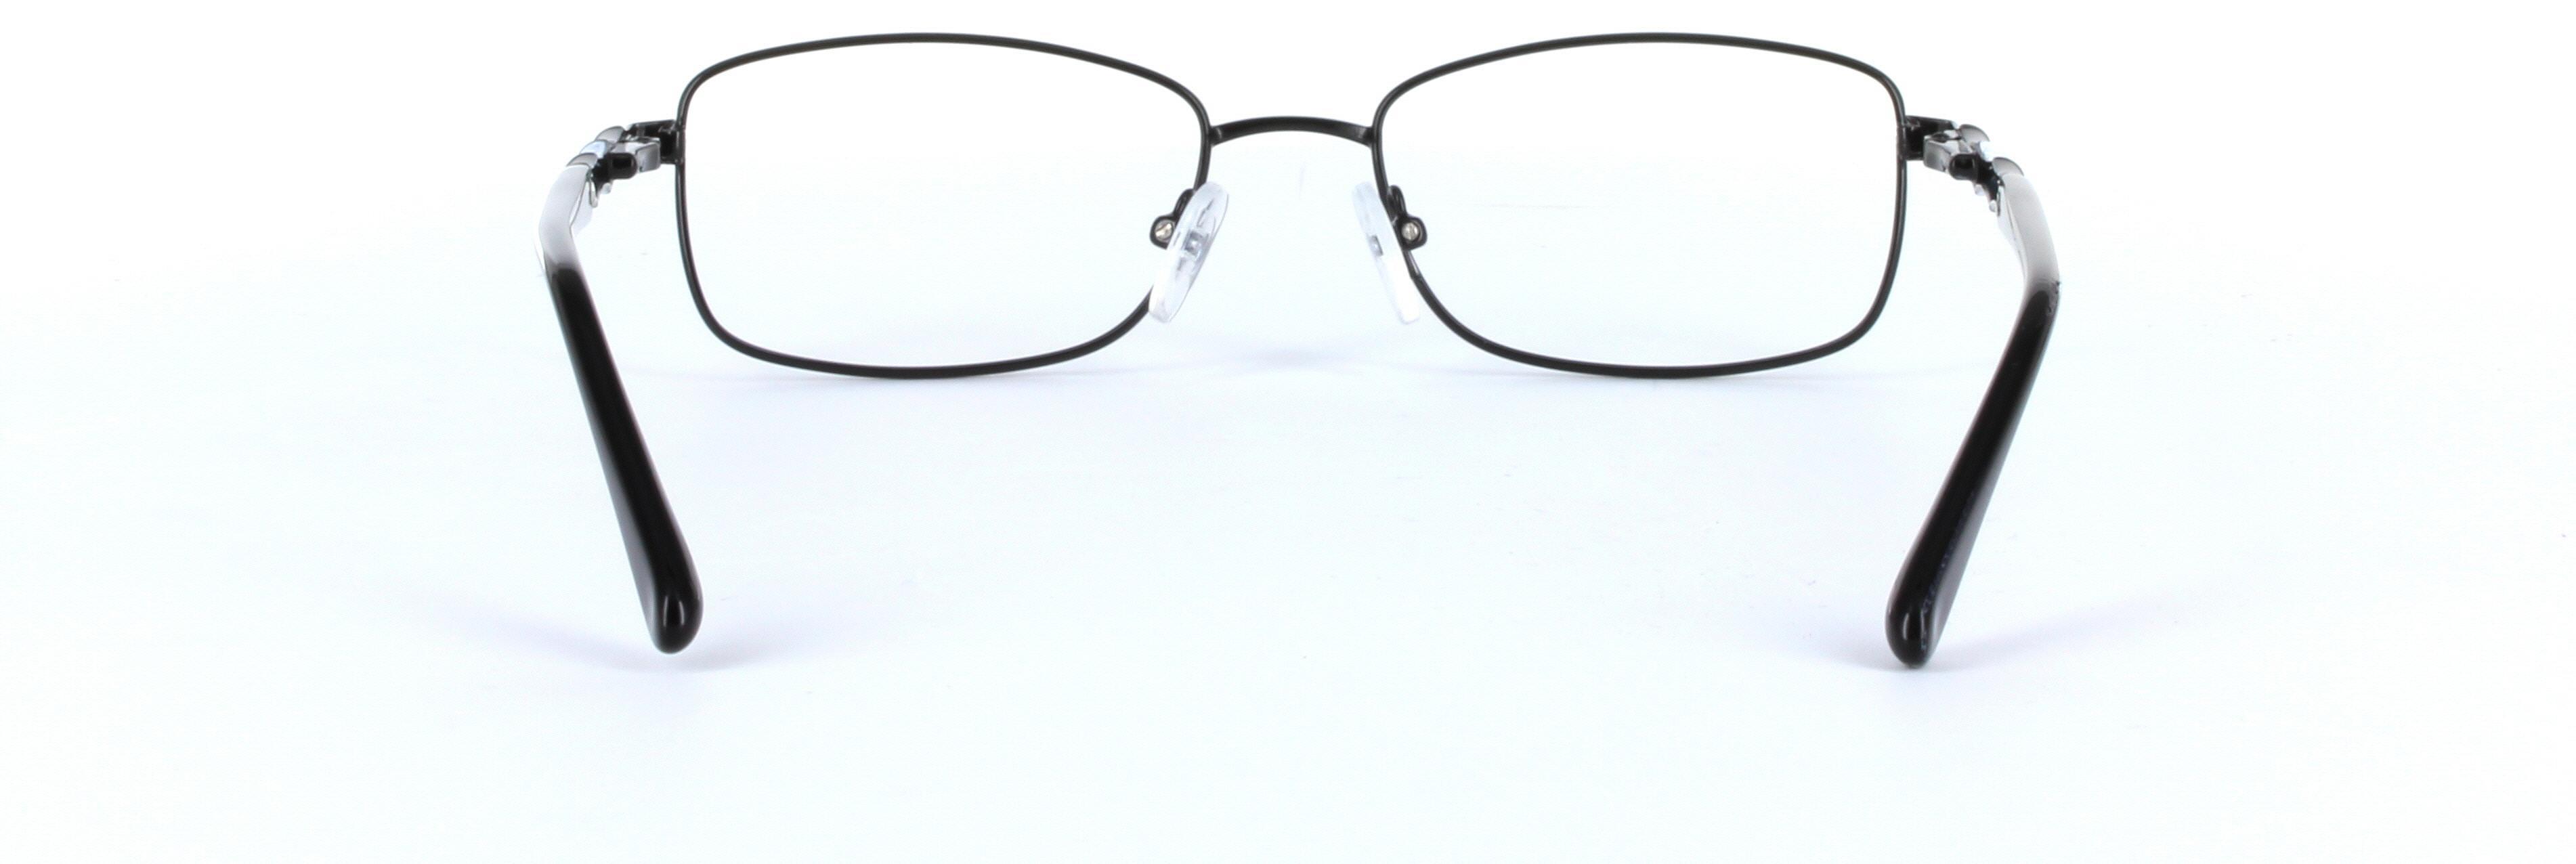 Kirsty Black Full Rim Oval Rectangular Metal Glasses - Image View 3